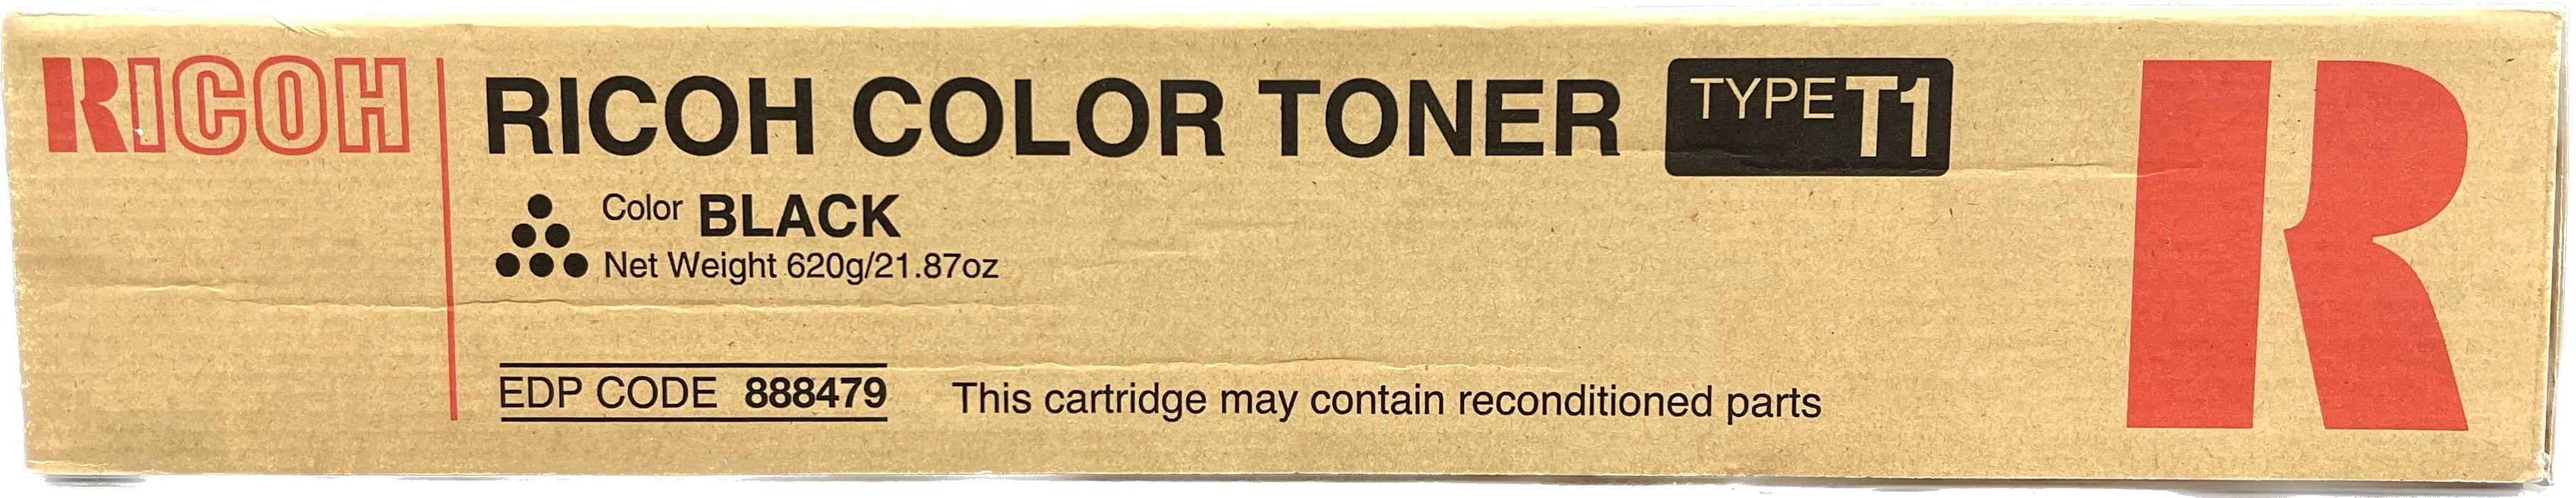 Genuine Ricoh Black Color Toner | 888479 | Type T1